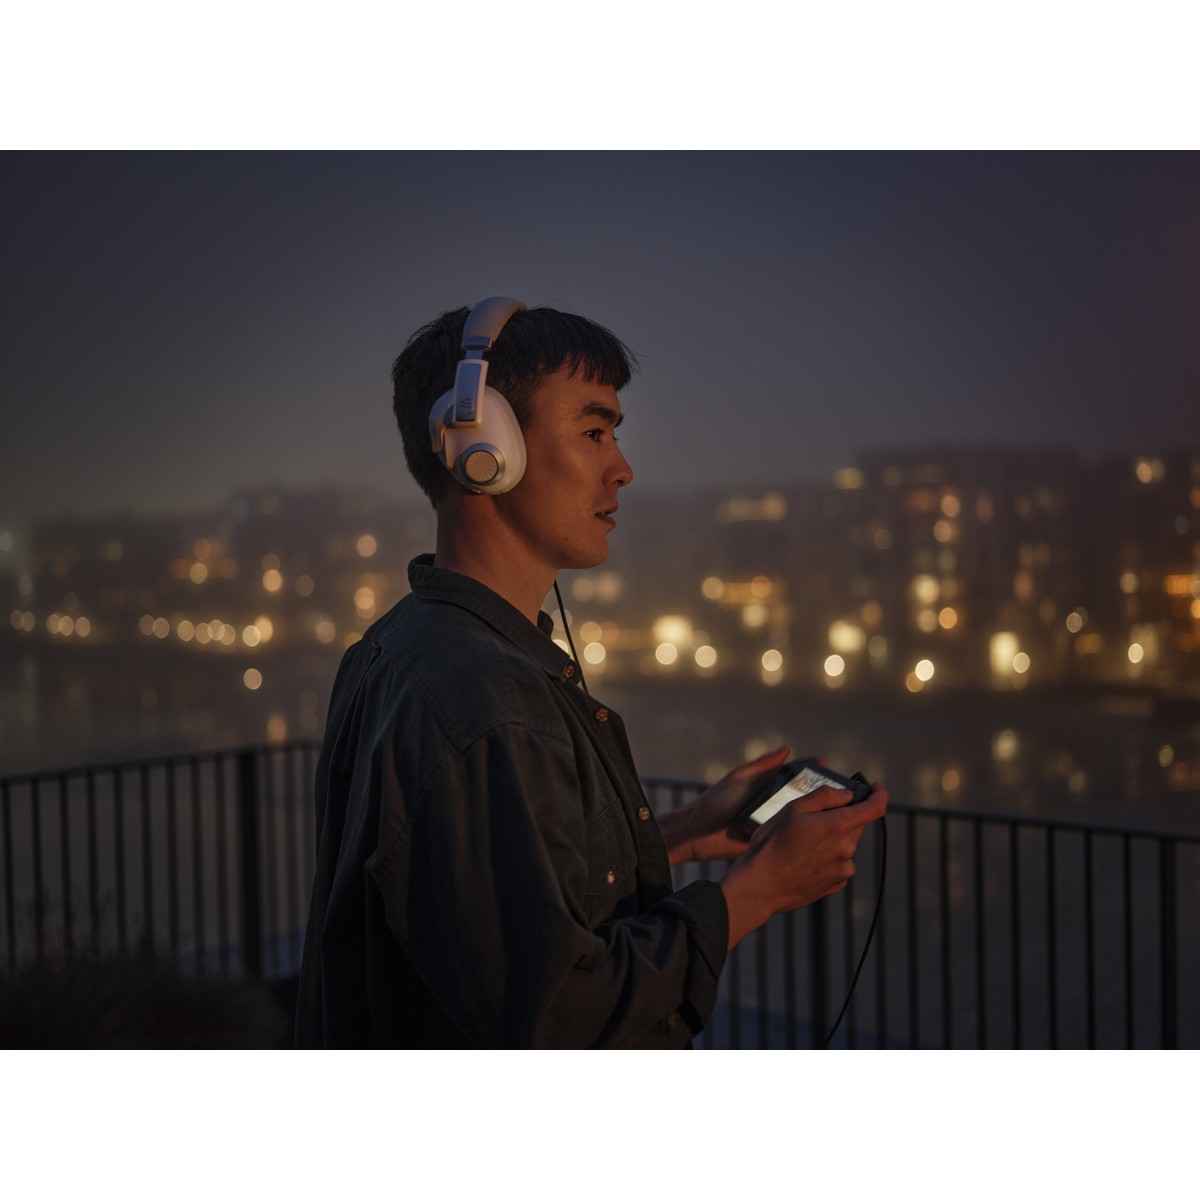 EPOS - EPOS H3 Pro Hybrid Gaming Bluetooth and Wired Headset - White